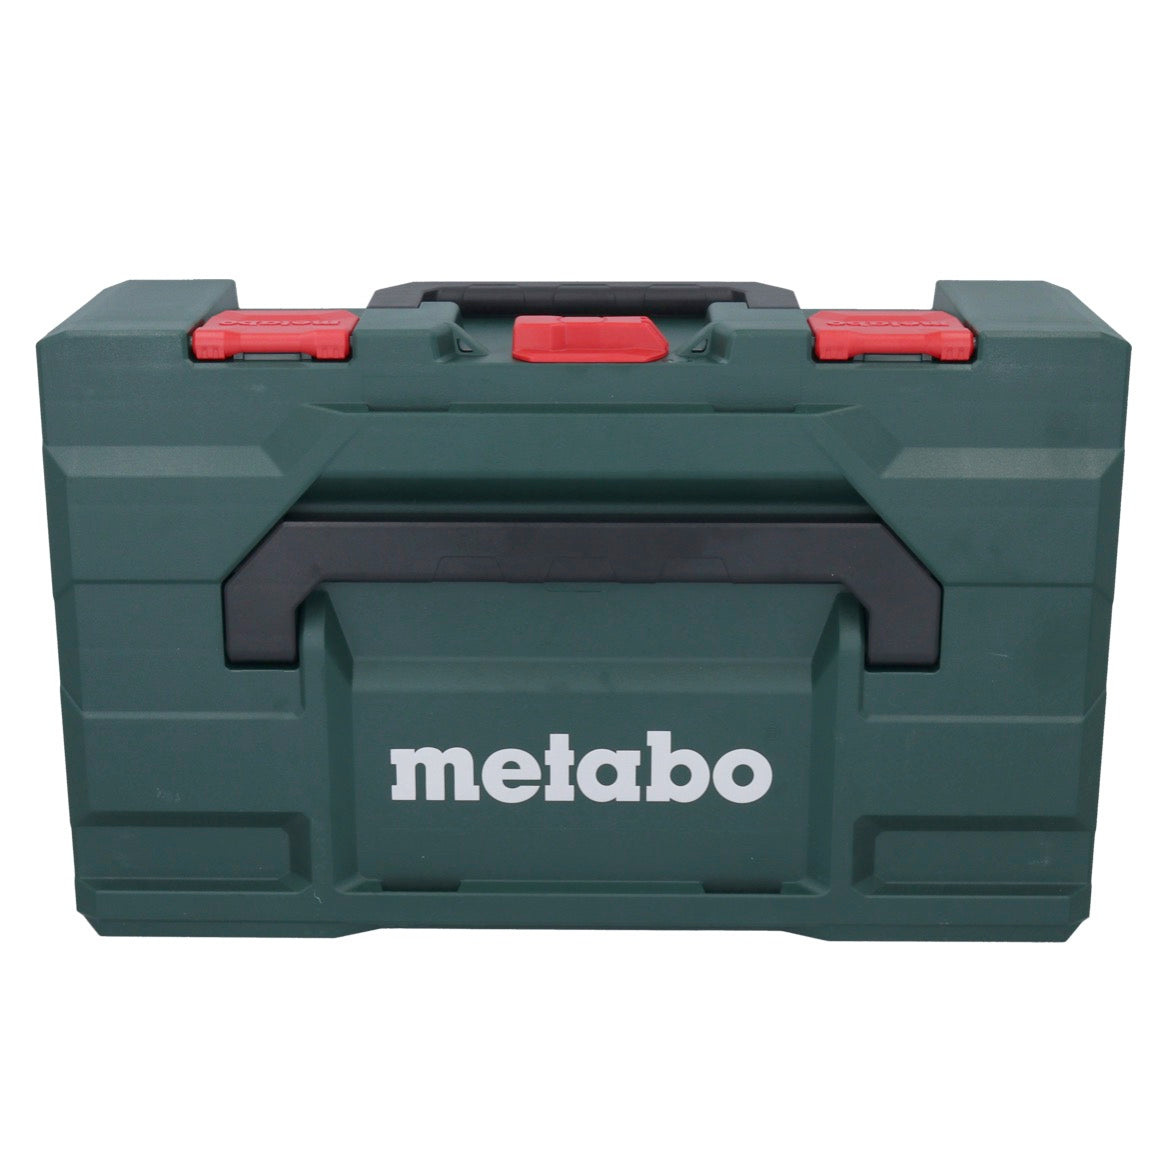 Metabo WB 18 LTX BL 15-125 Quick Akku Winkelschleifer 18 V 125 mm Brushless + 1x Akku 5,5 Ah + Ladegerät + metaBOX